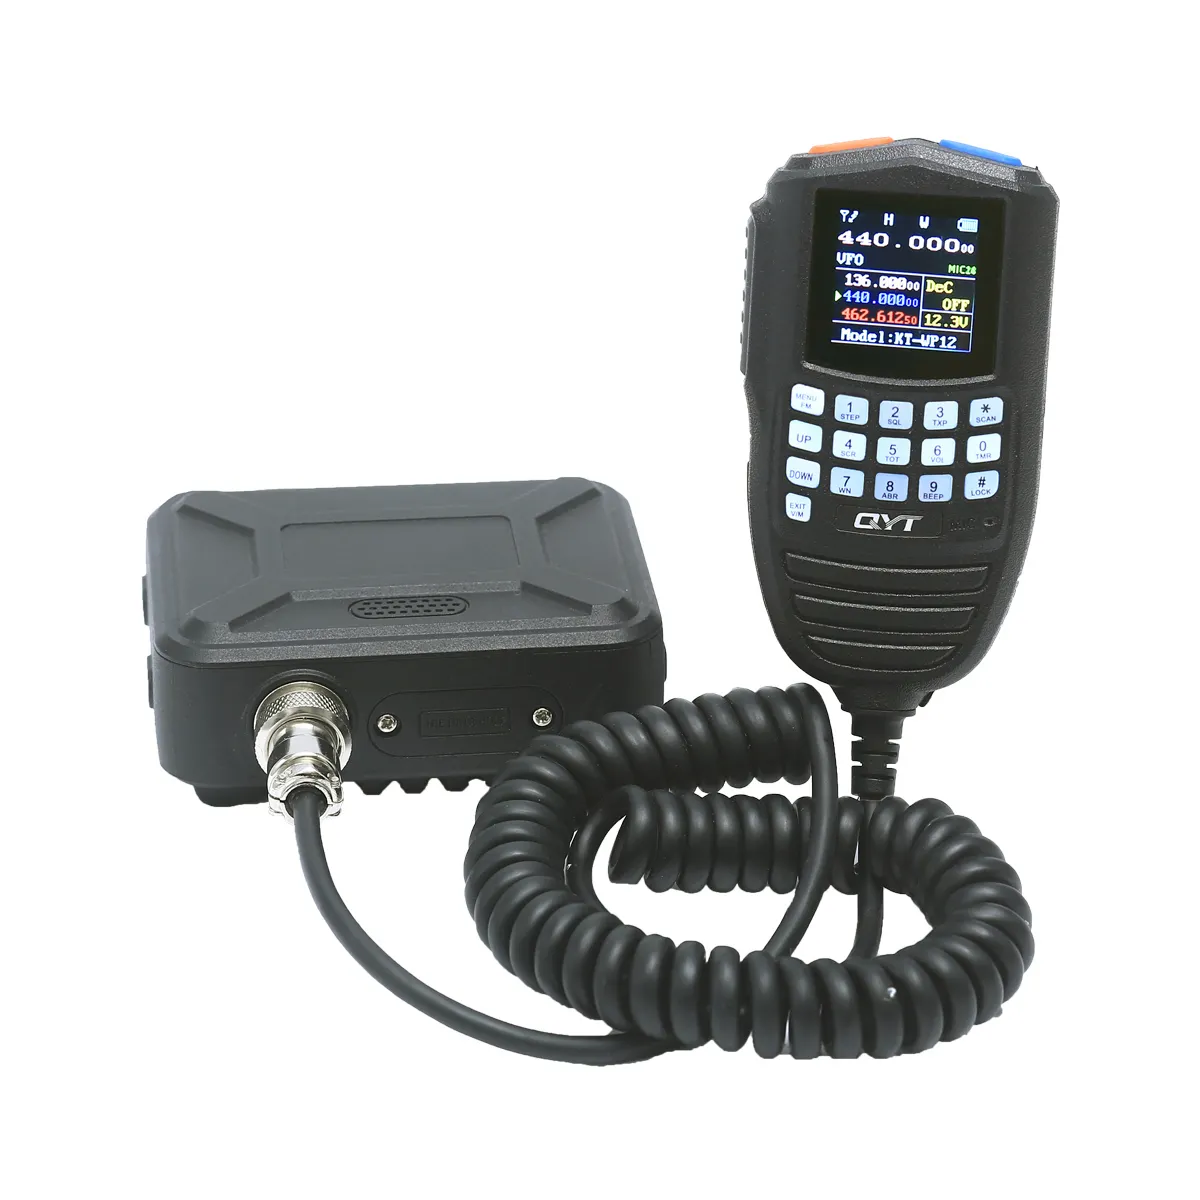 2023 novo produto QYT mini-impermeável 25w uhf vhf dual band walkie talkie KT-9900 estação de carro cross-country road trip mini rádio